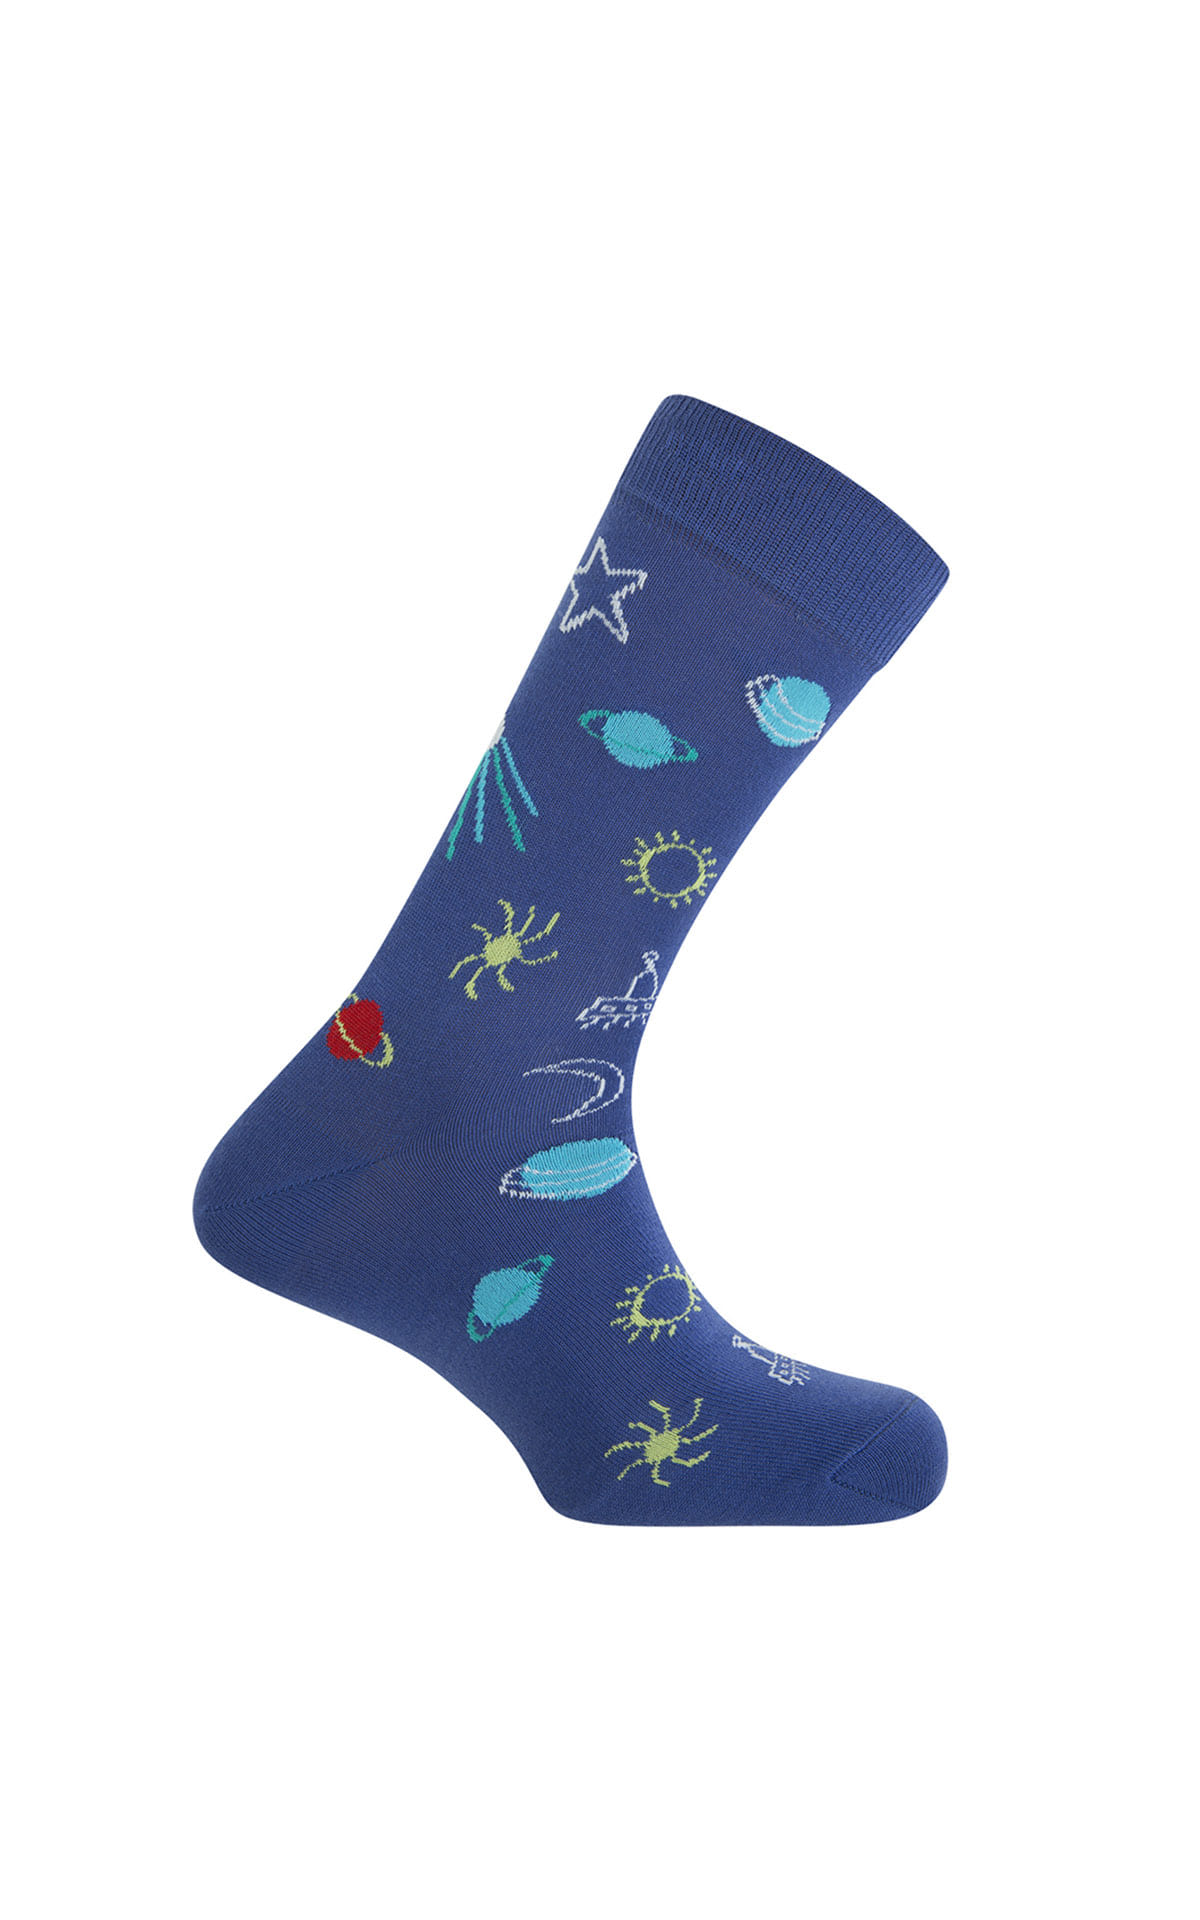 Blue space sock